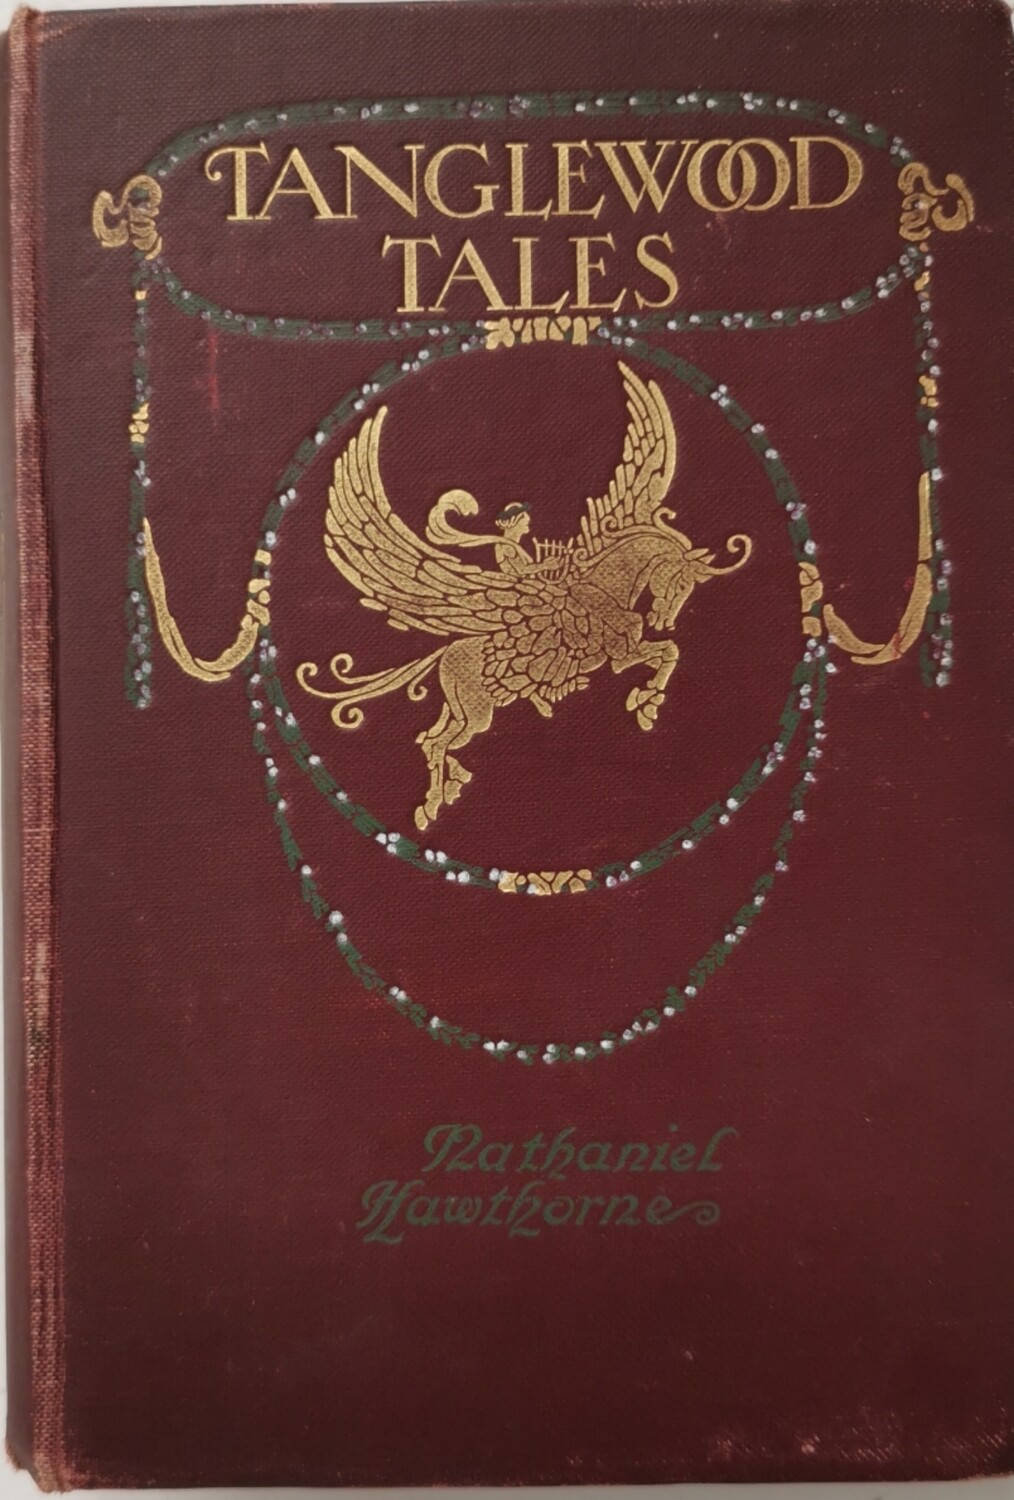 Tanglewood tales, Nathaniel Hawthorne